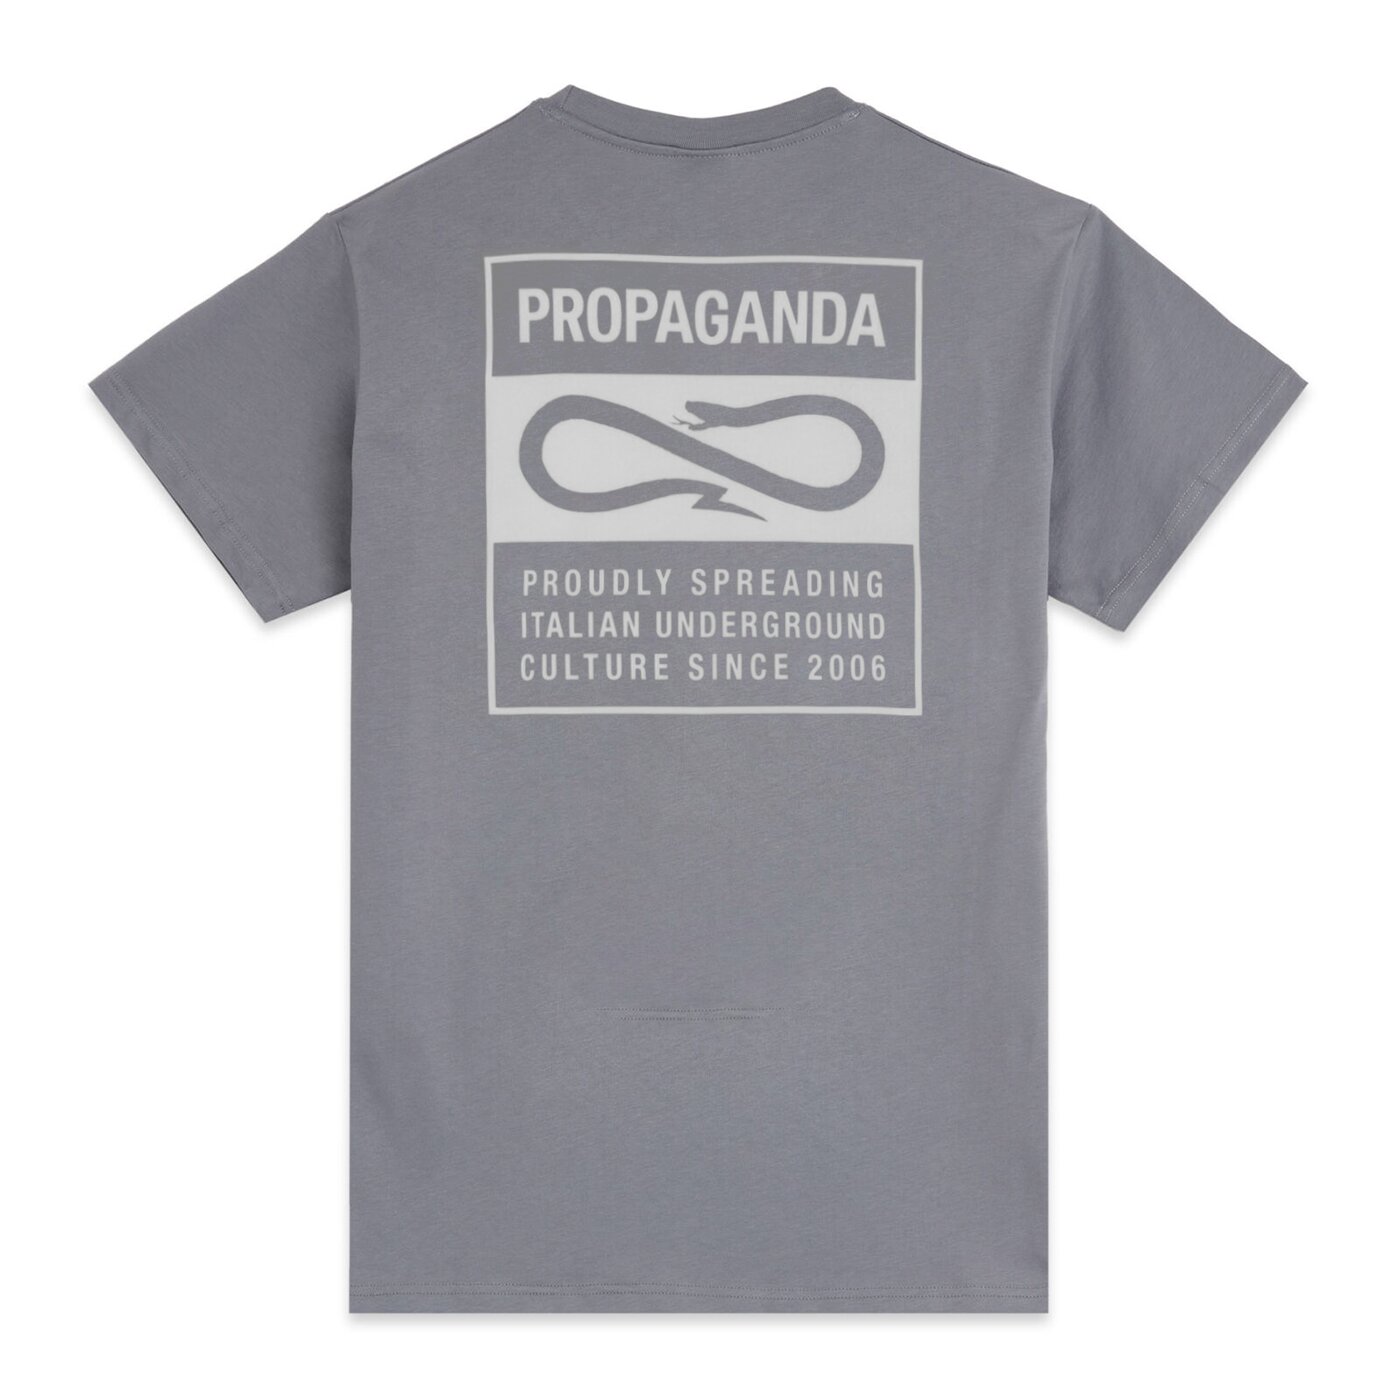 T-Shirts - Propaganda Clothing Brand